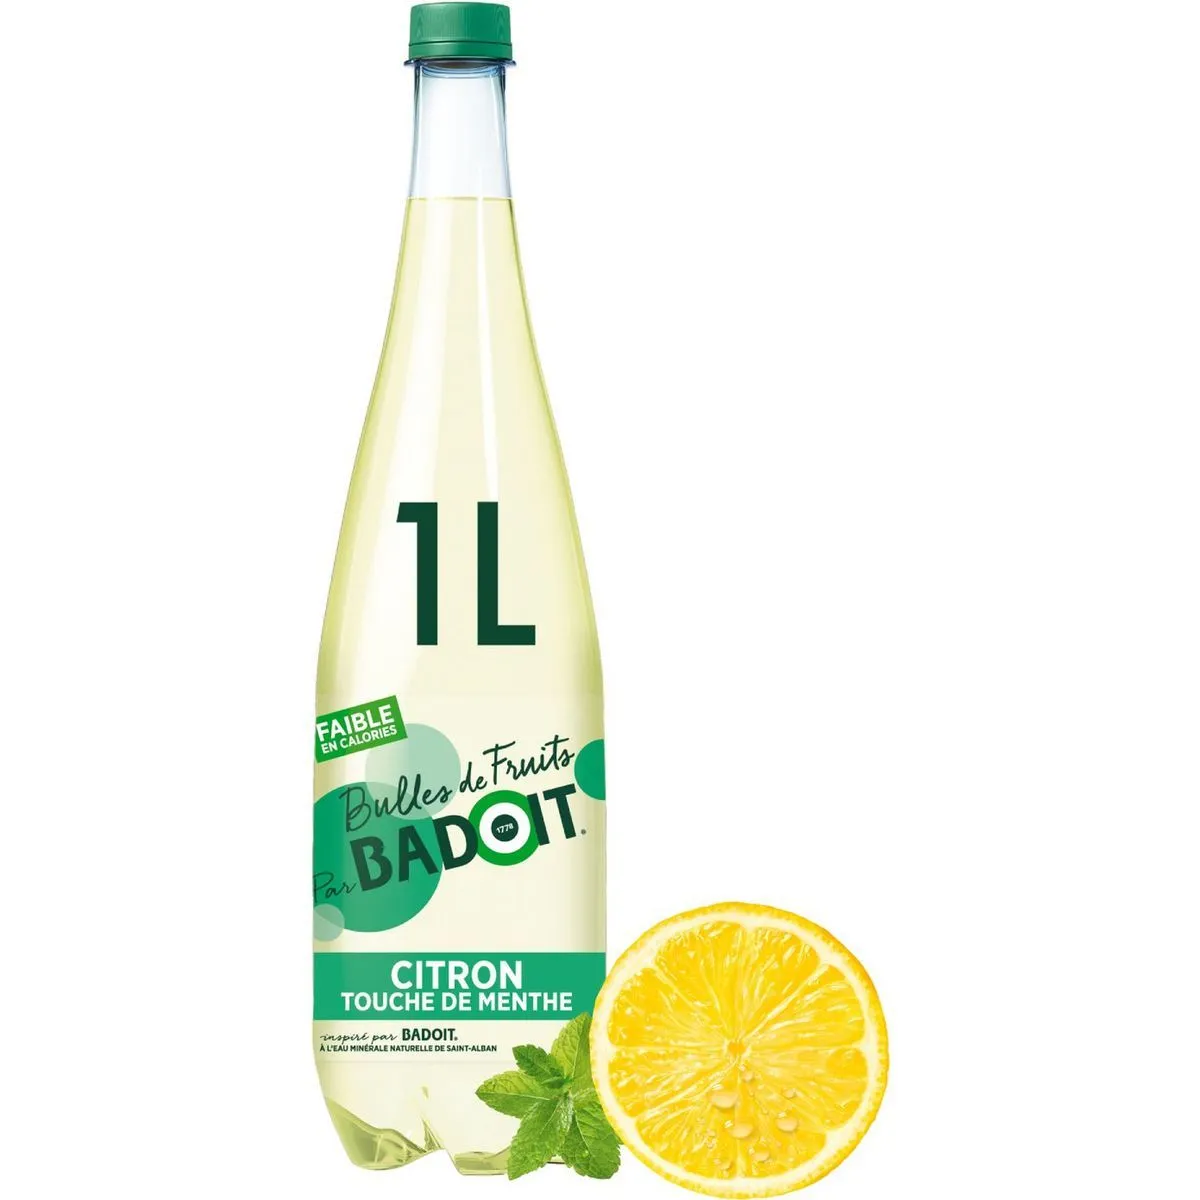 badoit aromatisée citron